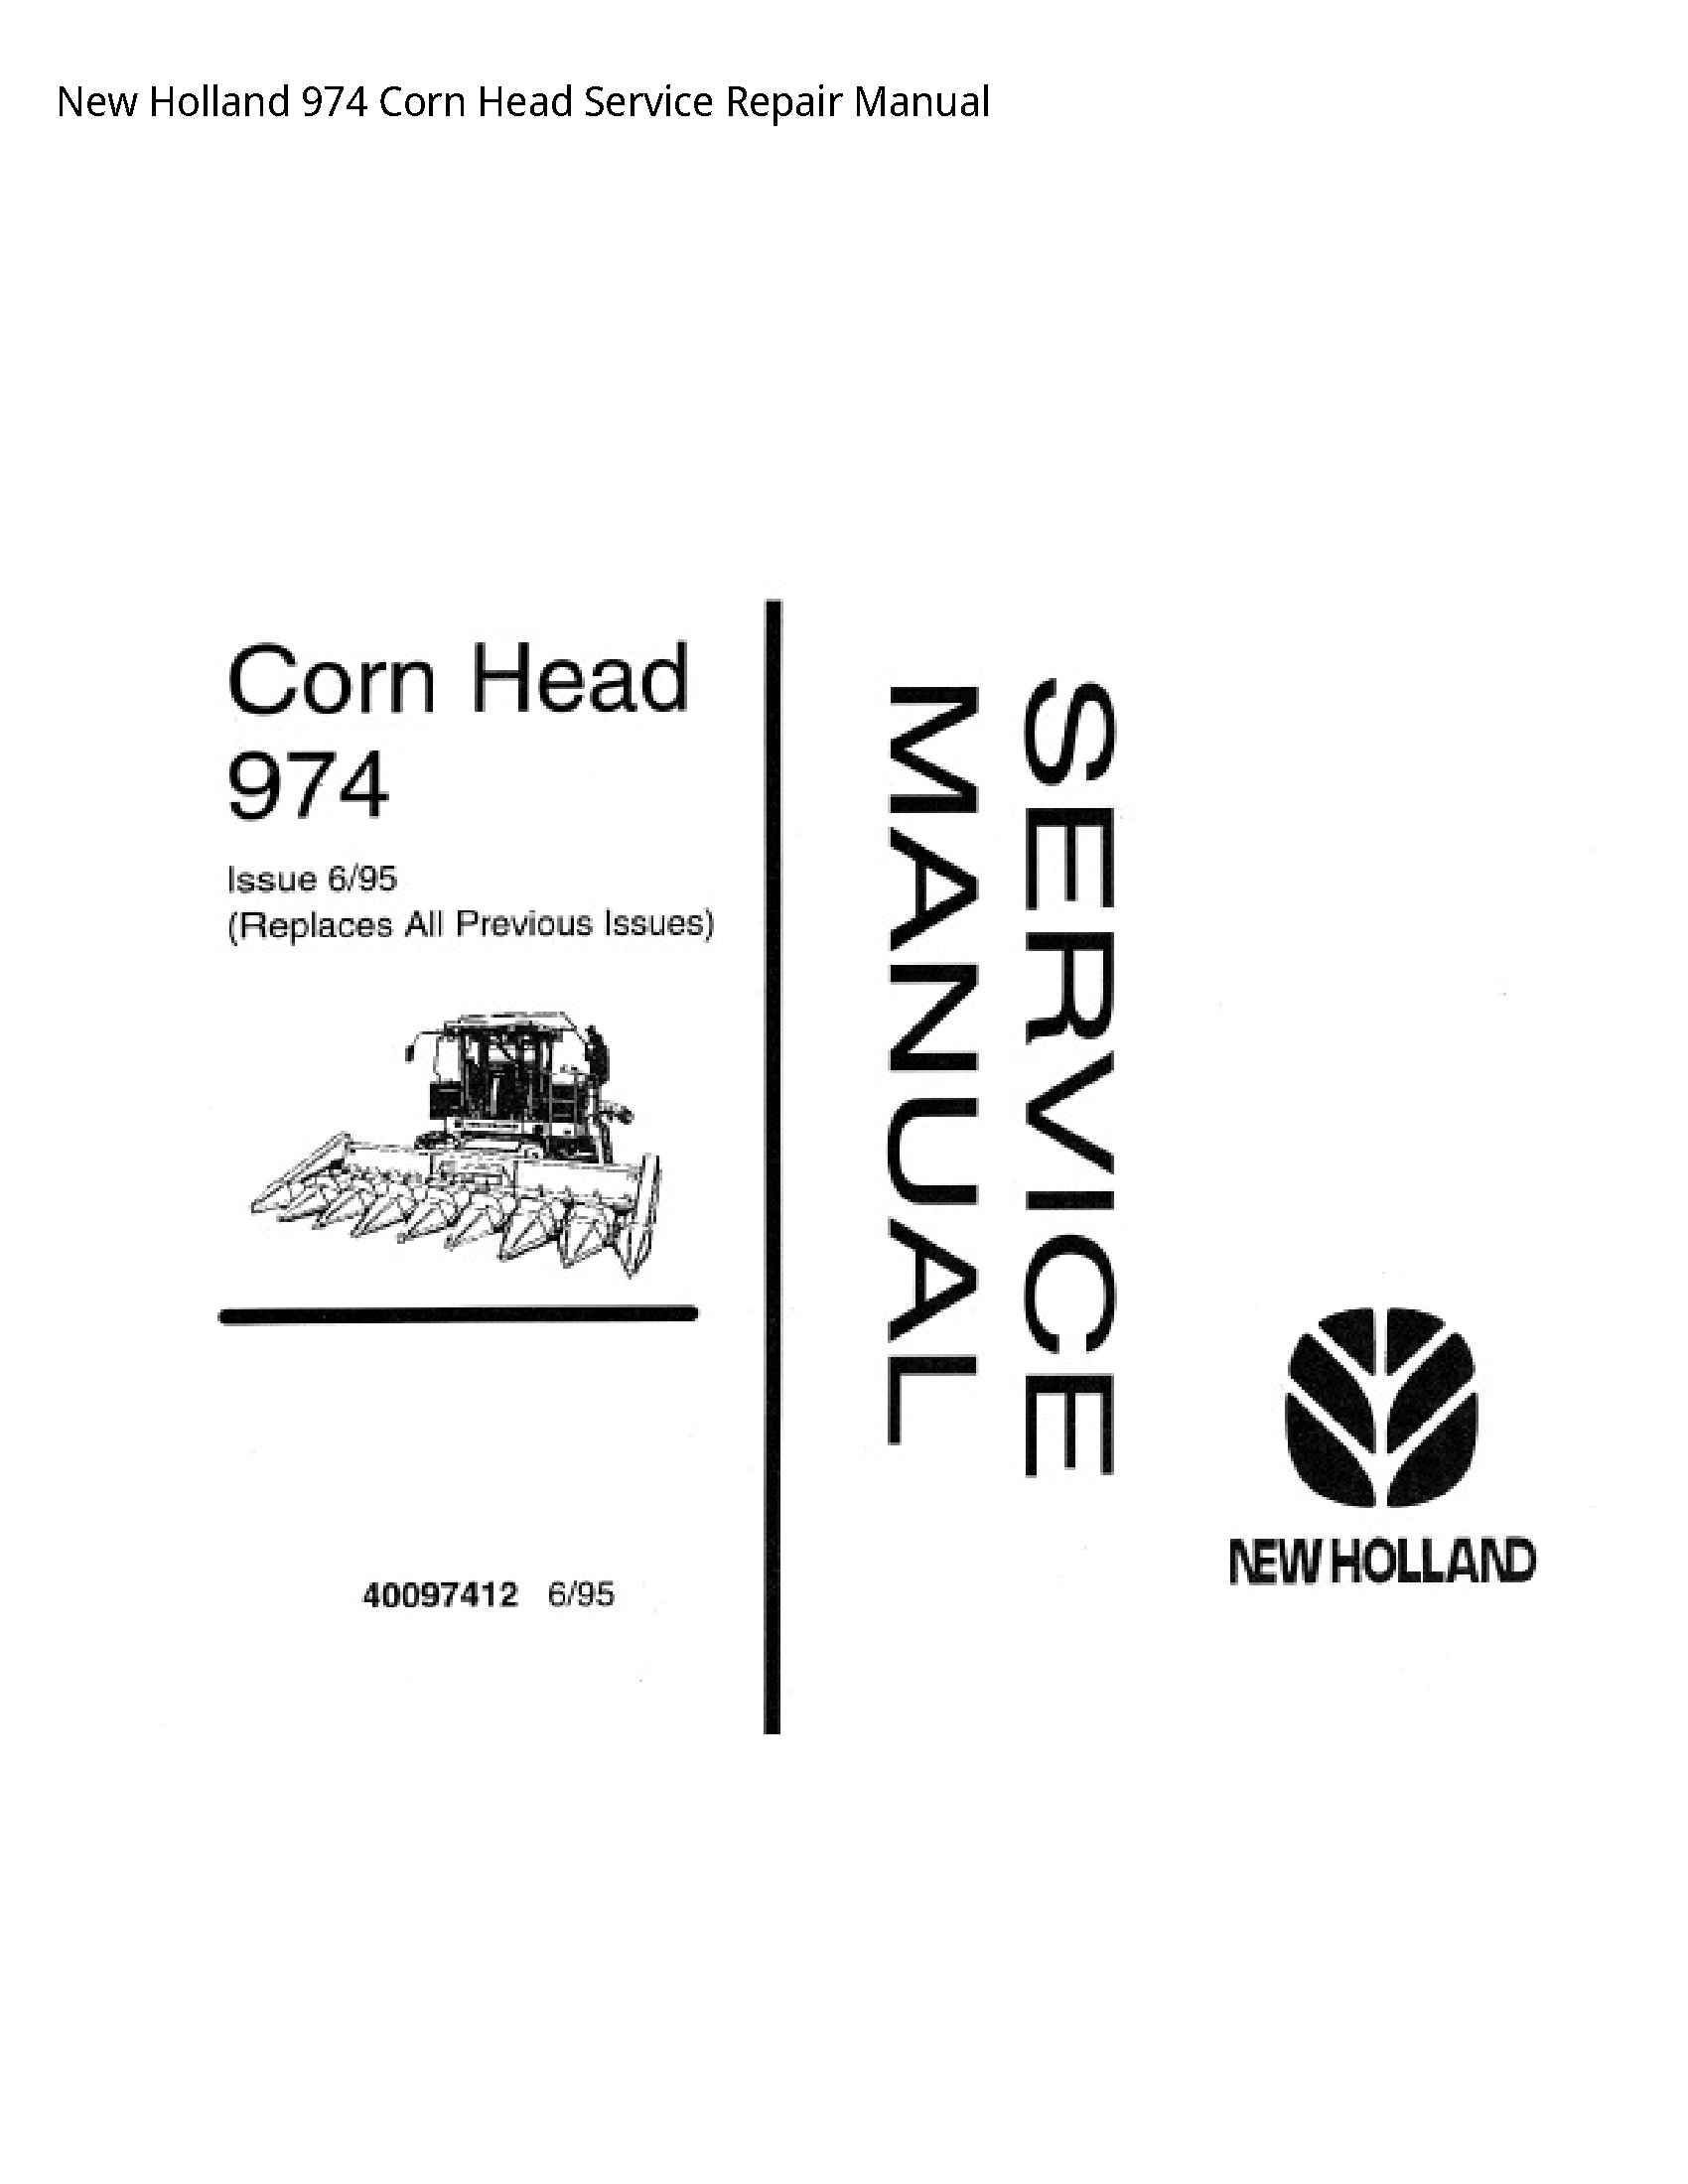 New Holland 974 Corn Head manual